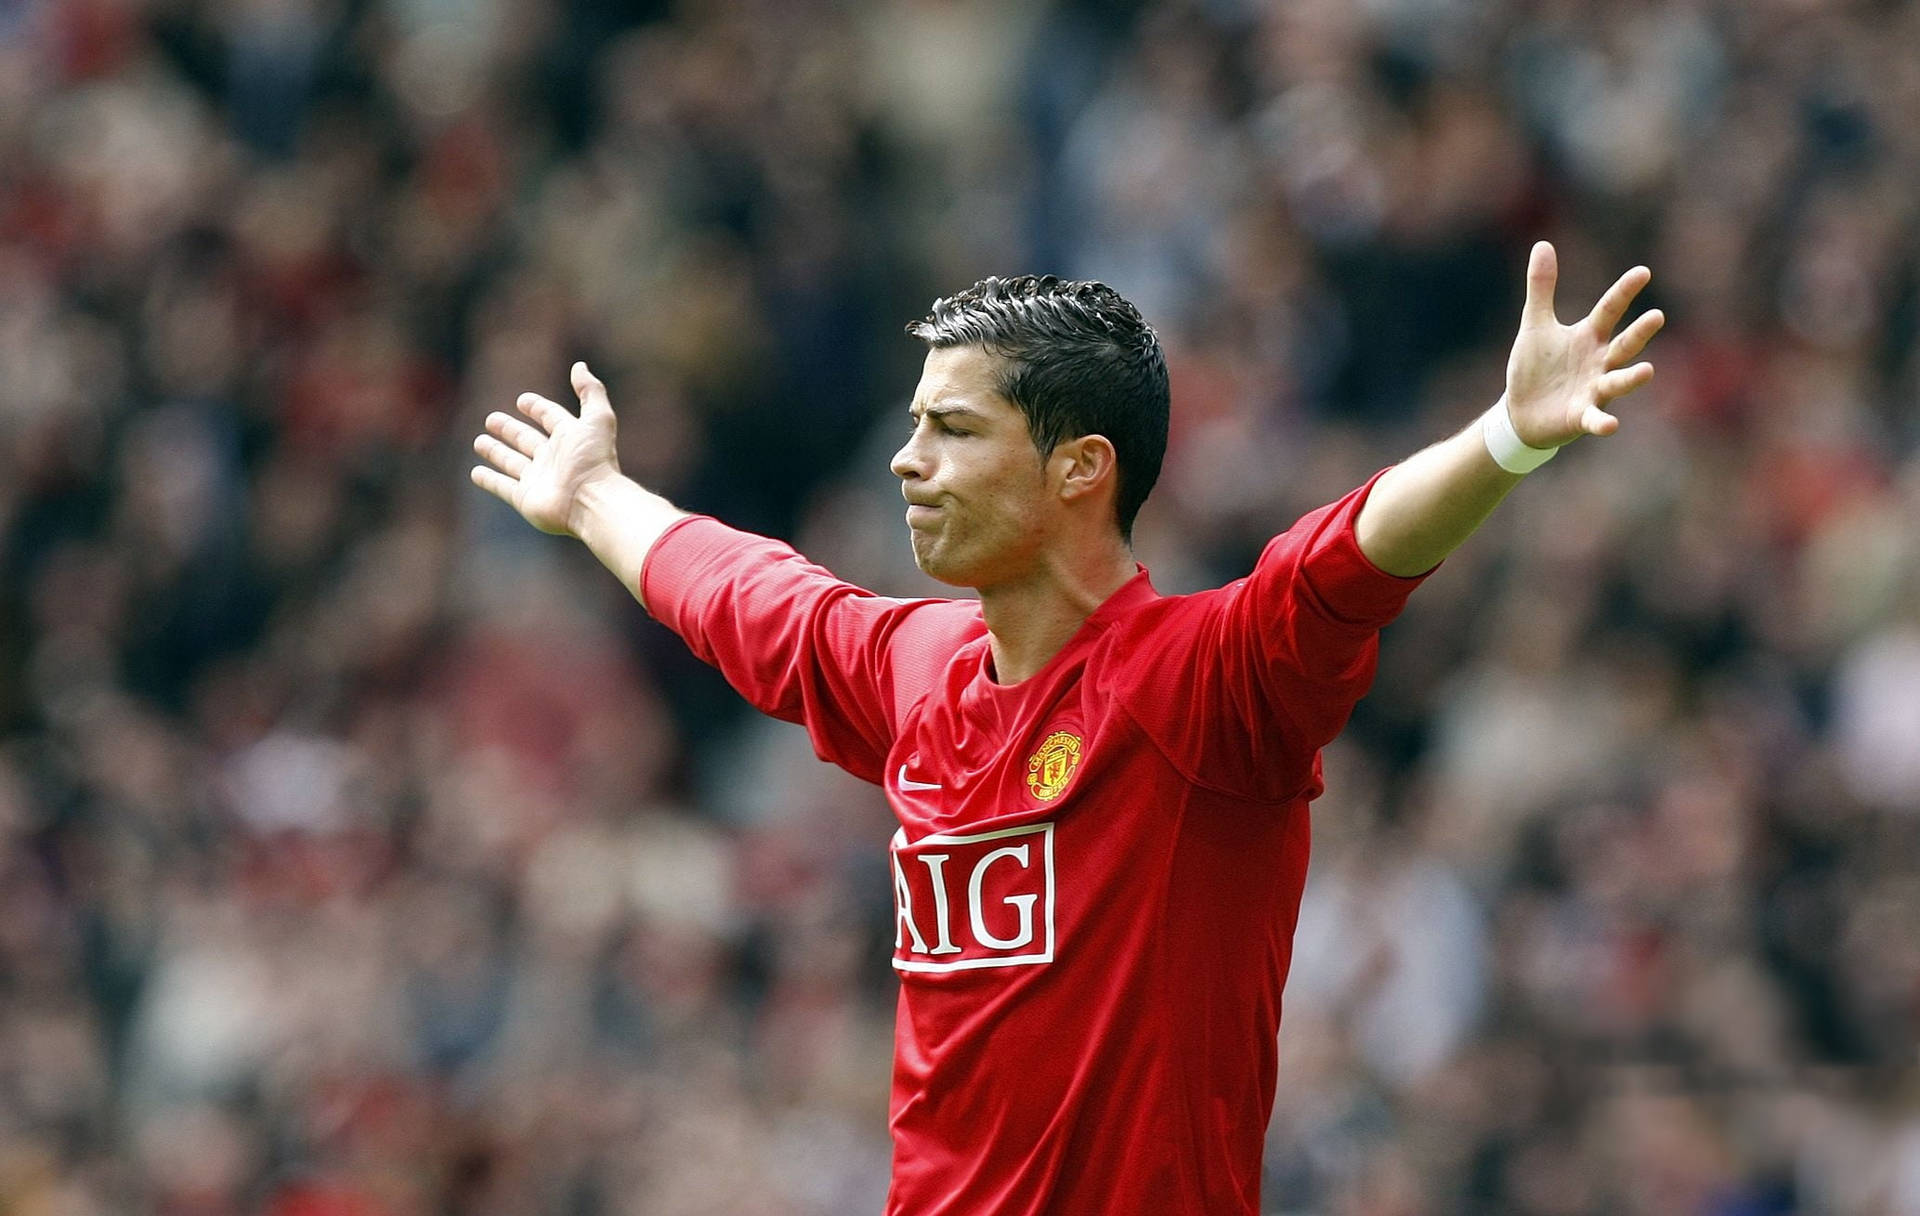 Cristiano Ronaldo Manchester United Hands Up Wallpaper